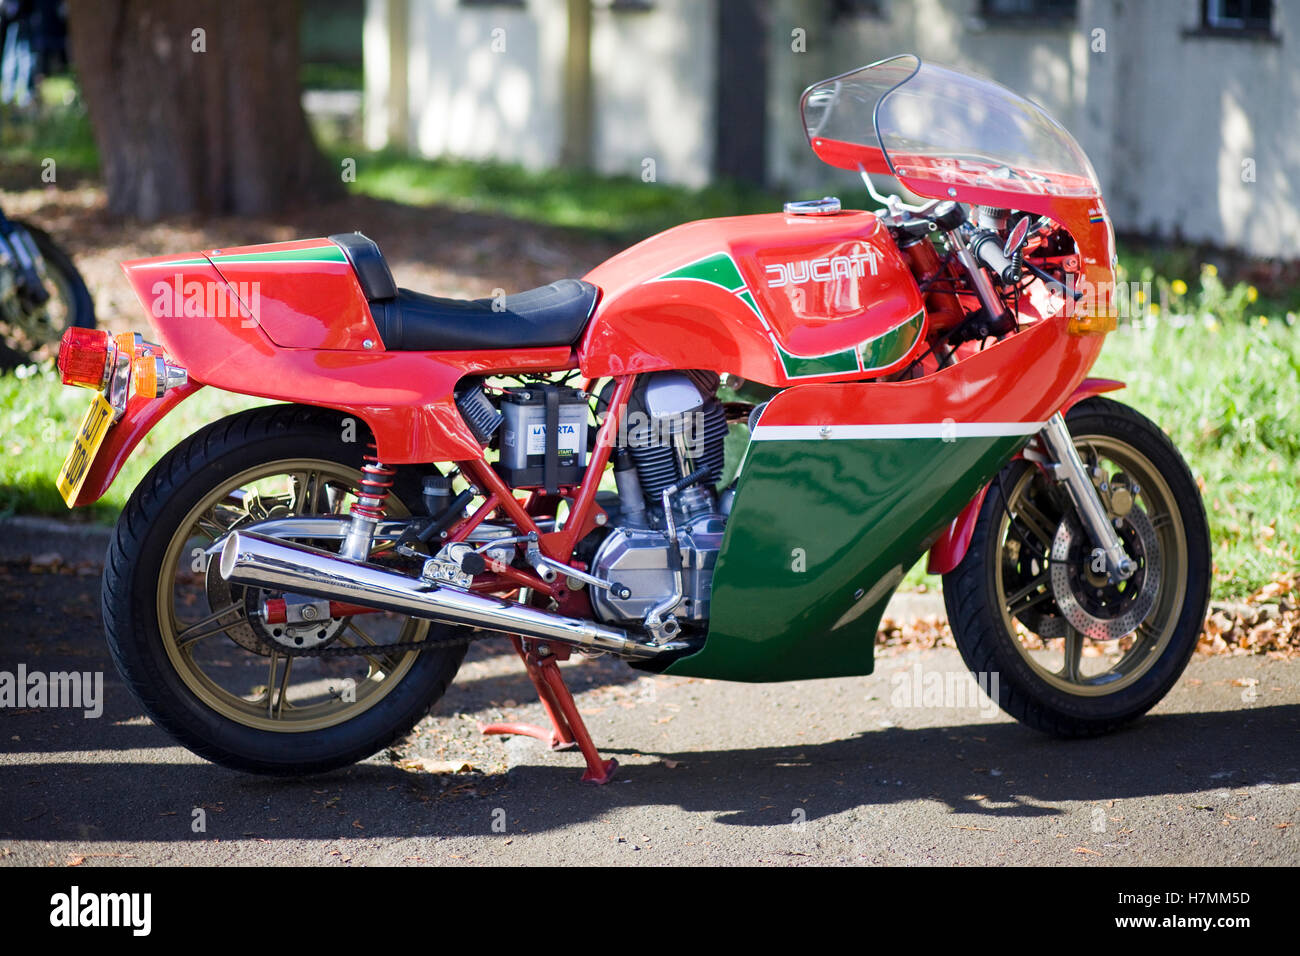 Ducati 900 Mike Hailwood Replica motorcycle Stock Photo